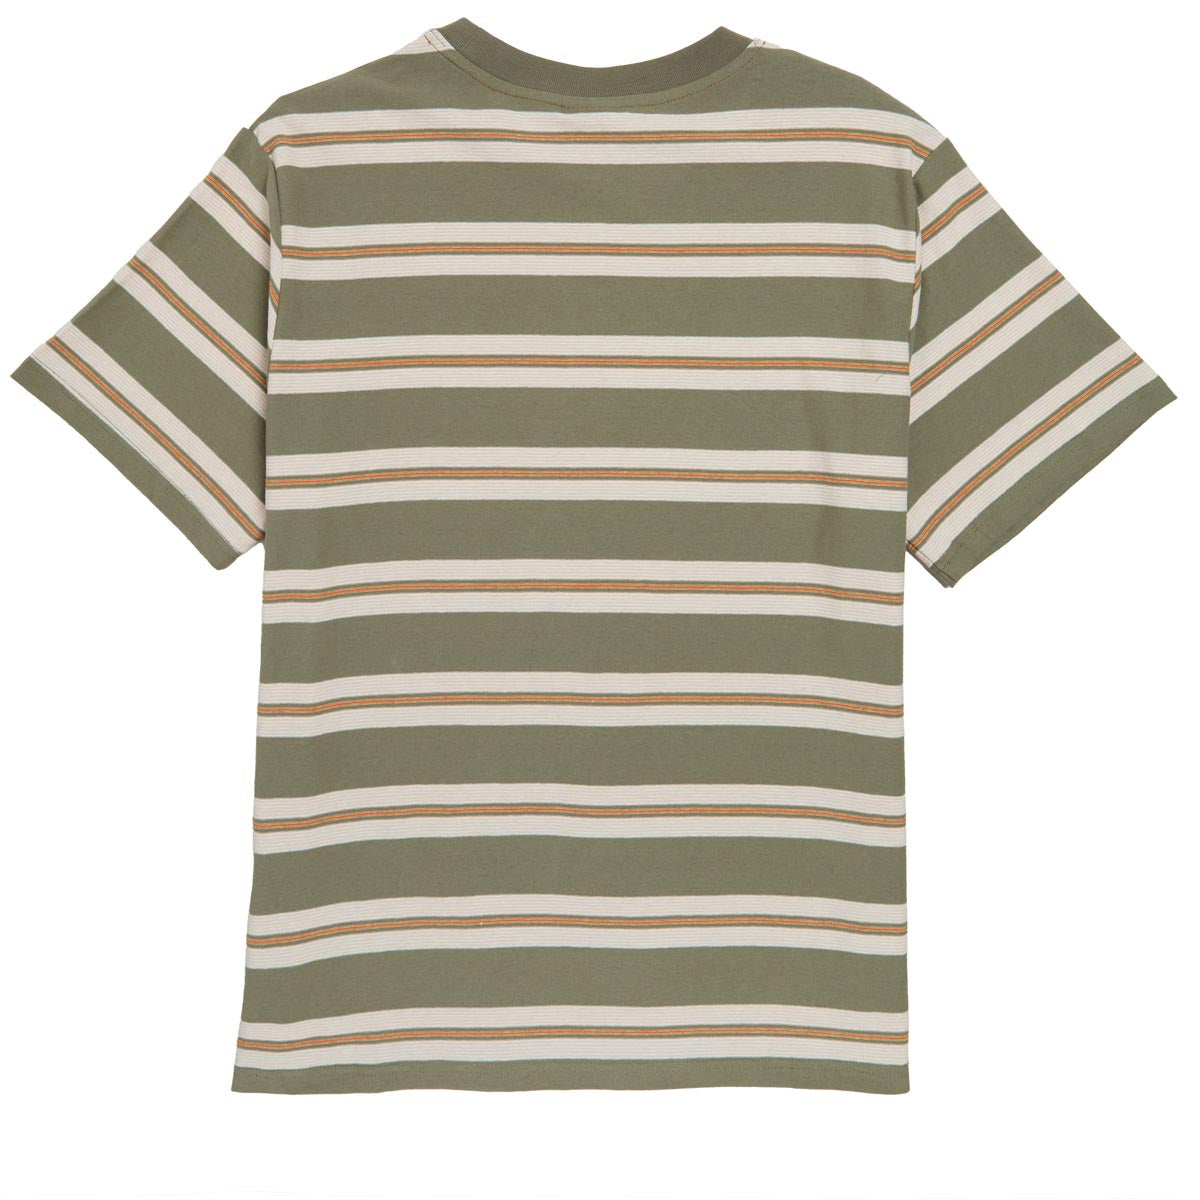 Rhythm Vintage Stripe T-Shirt - Olive image 2